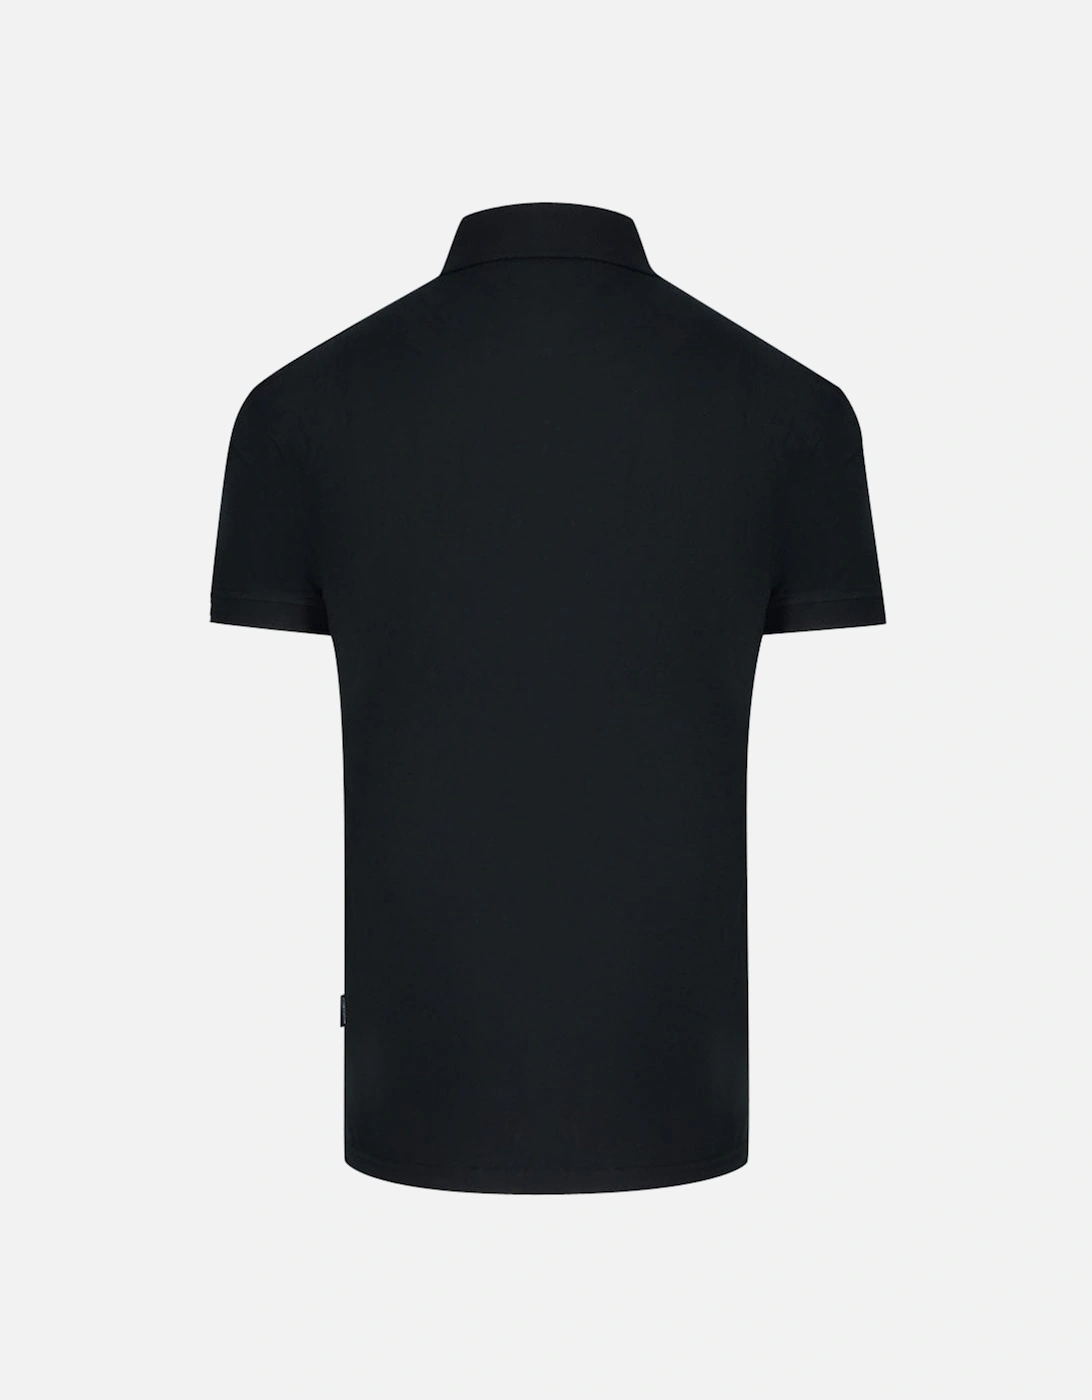 Aldis London Logo Black Polo Shirt